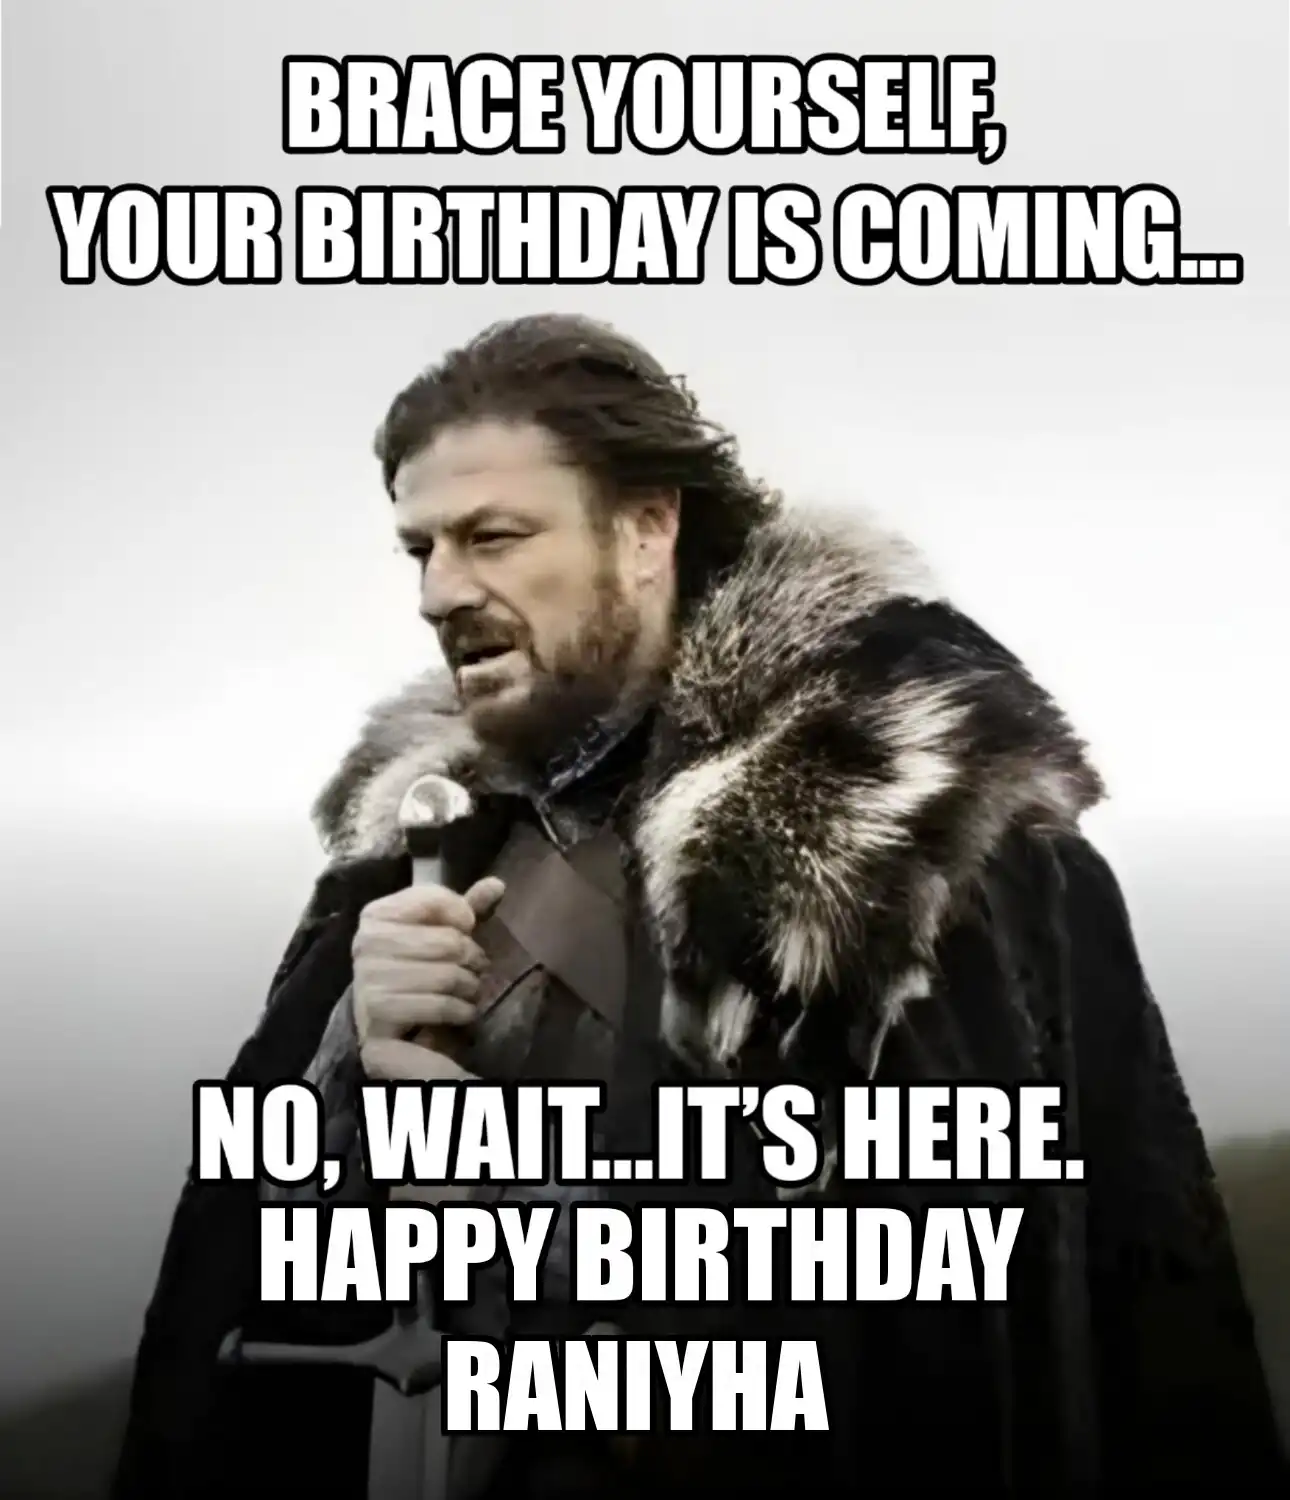 Happy Birthday Raniyha Brace Yourself Your Birthday Is Coming Meme